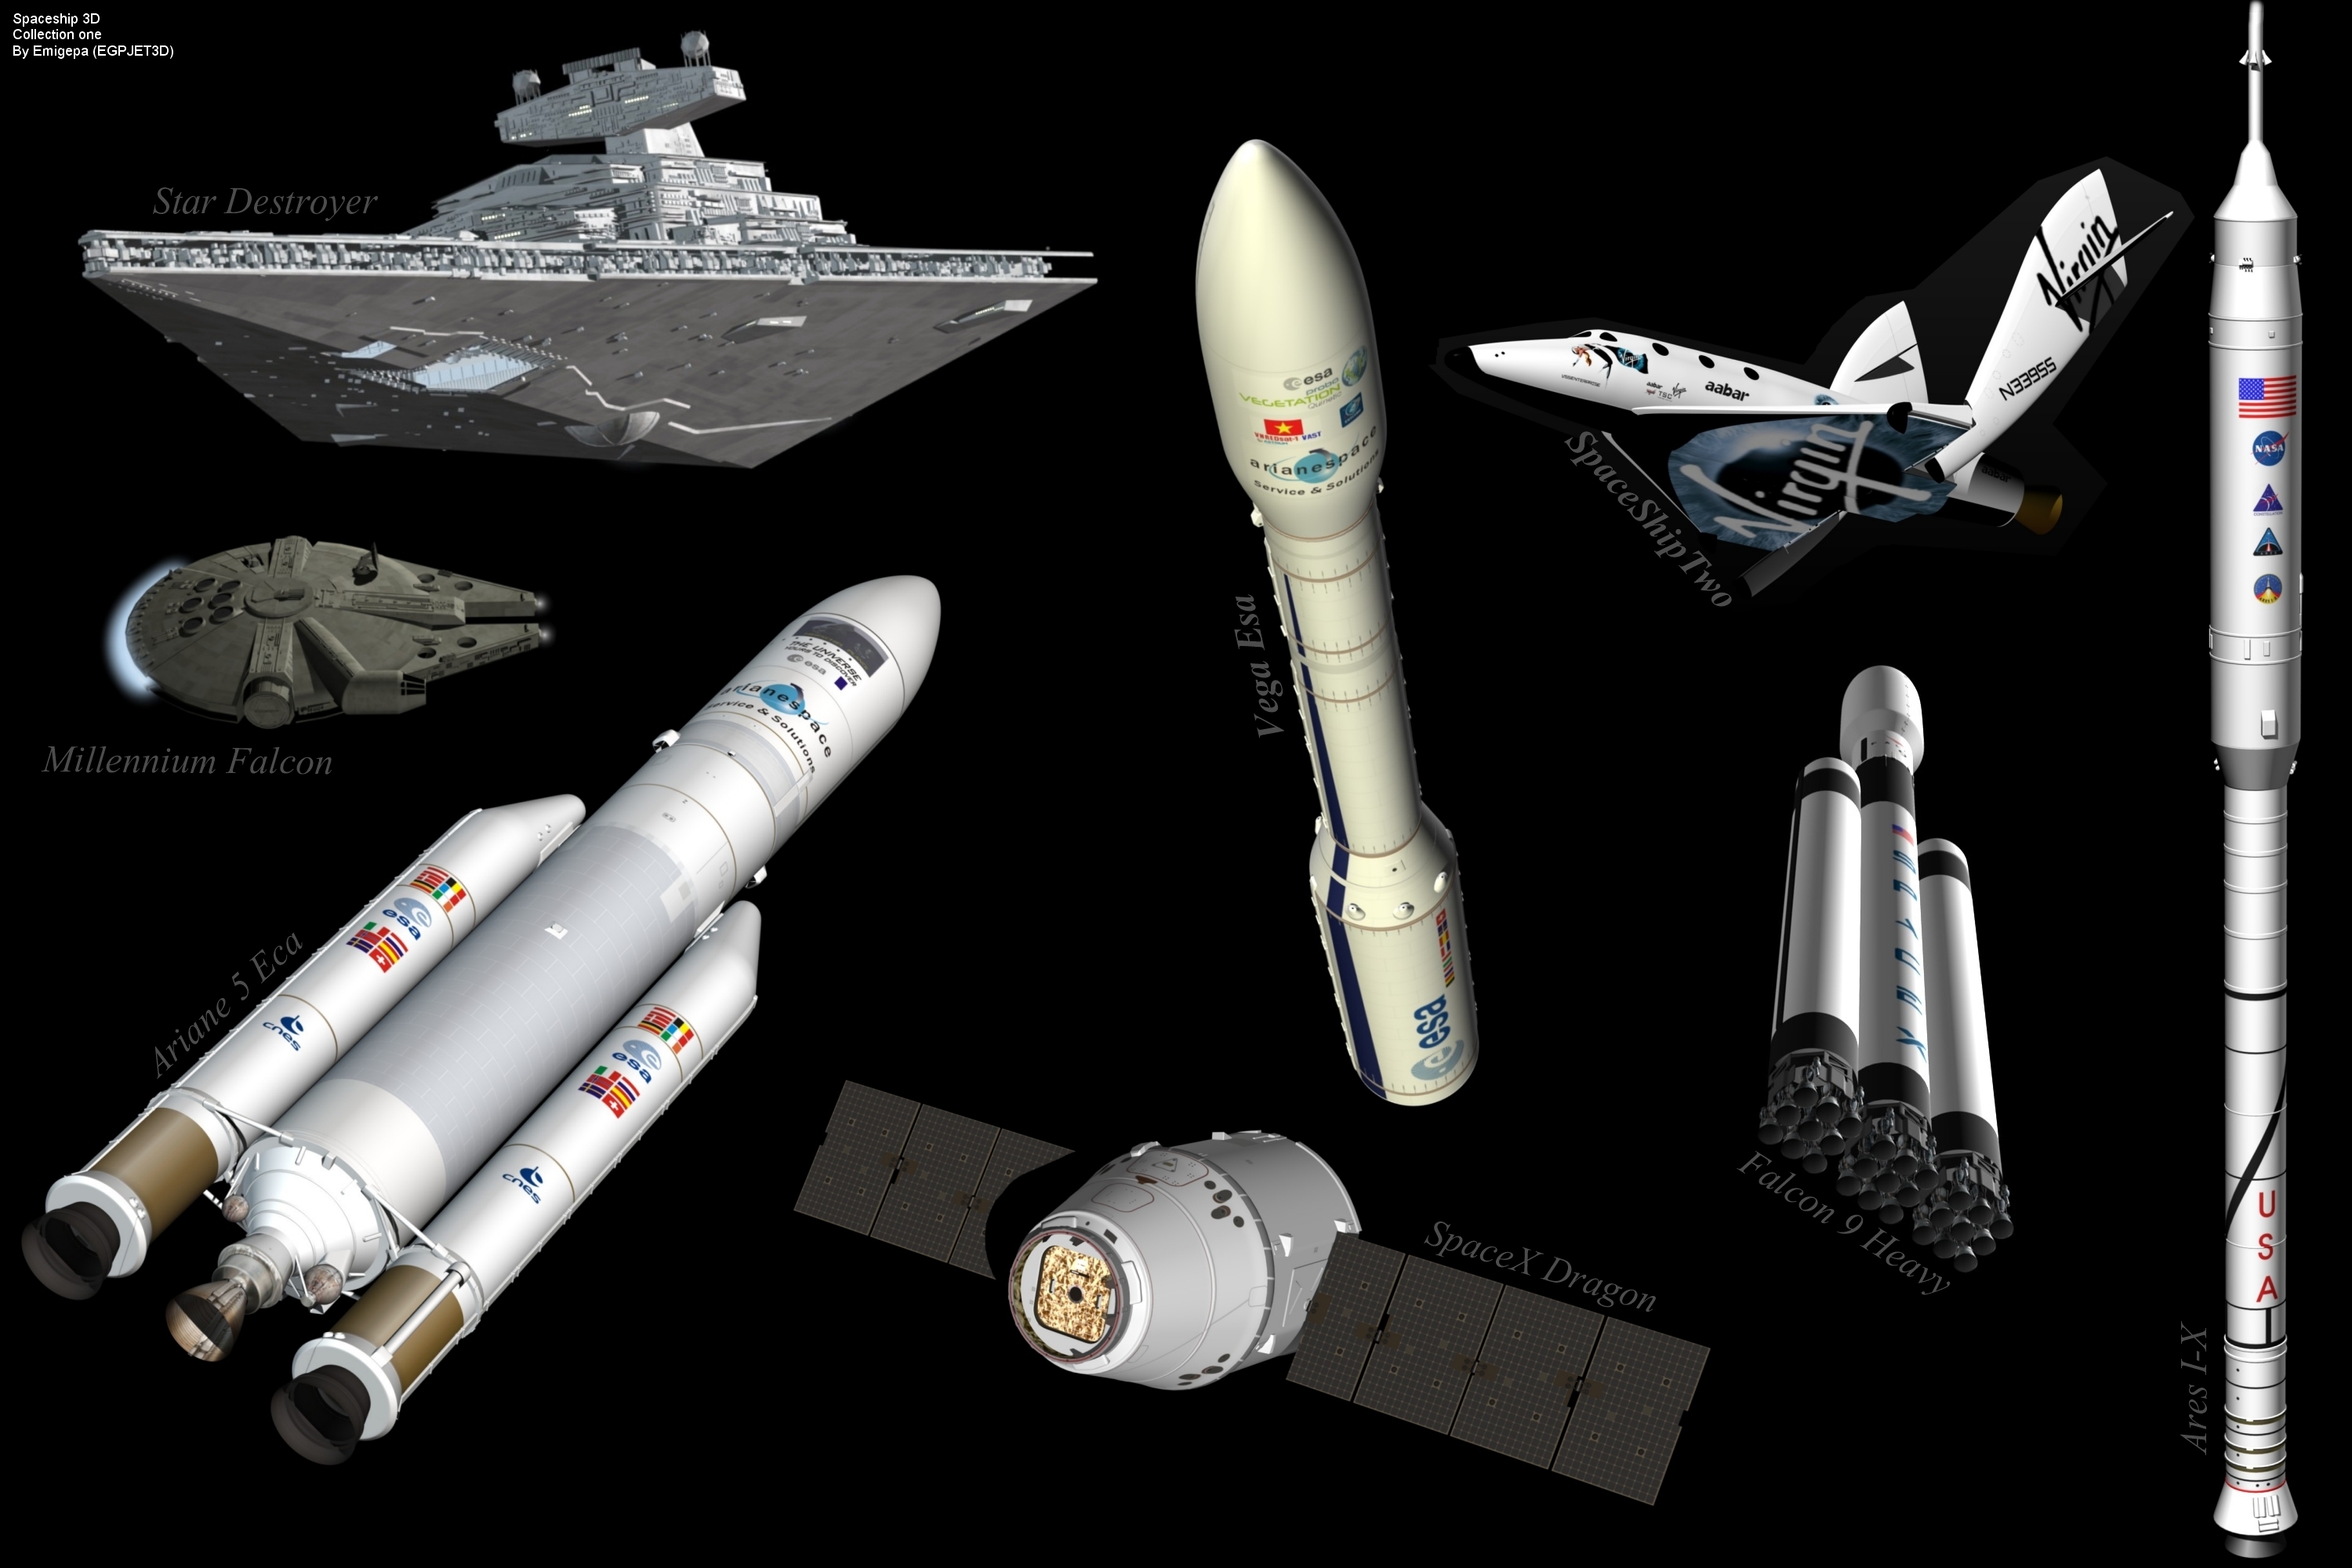 Blender 3D Spaceships models by Emigepa on DeviantArt